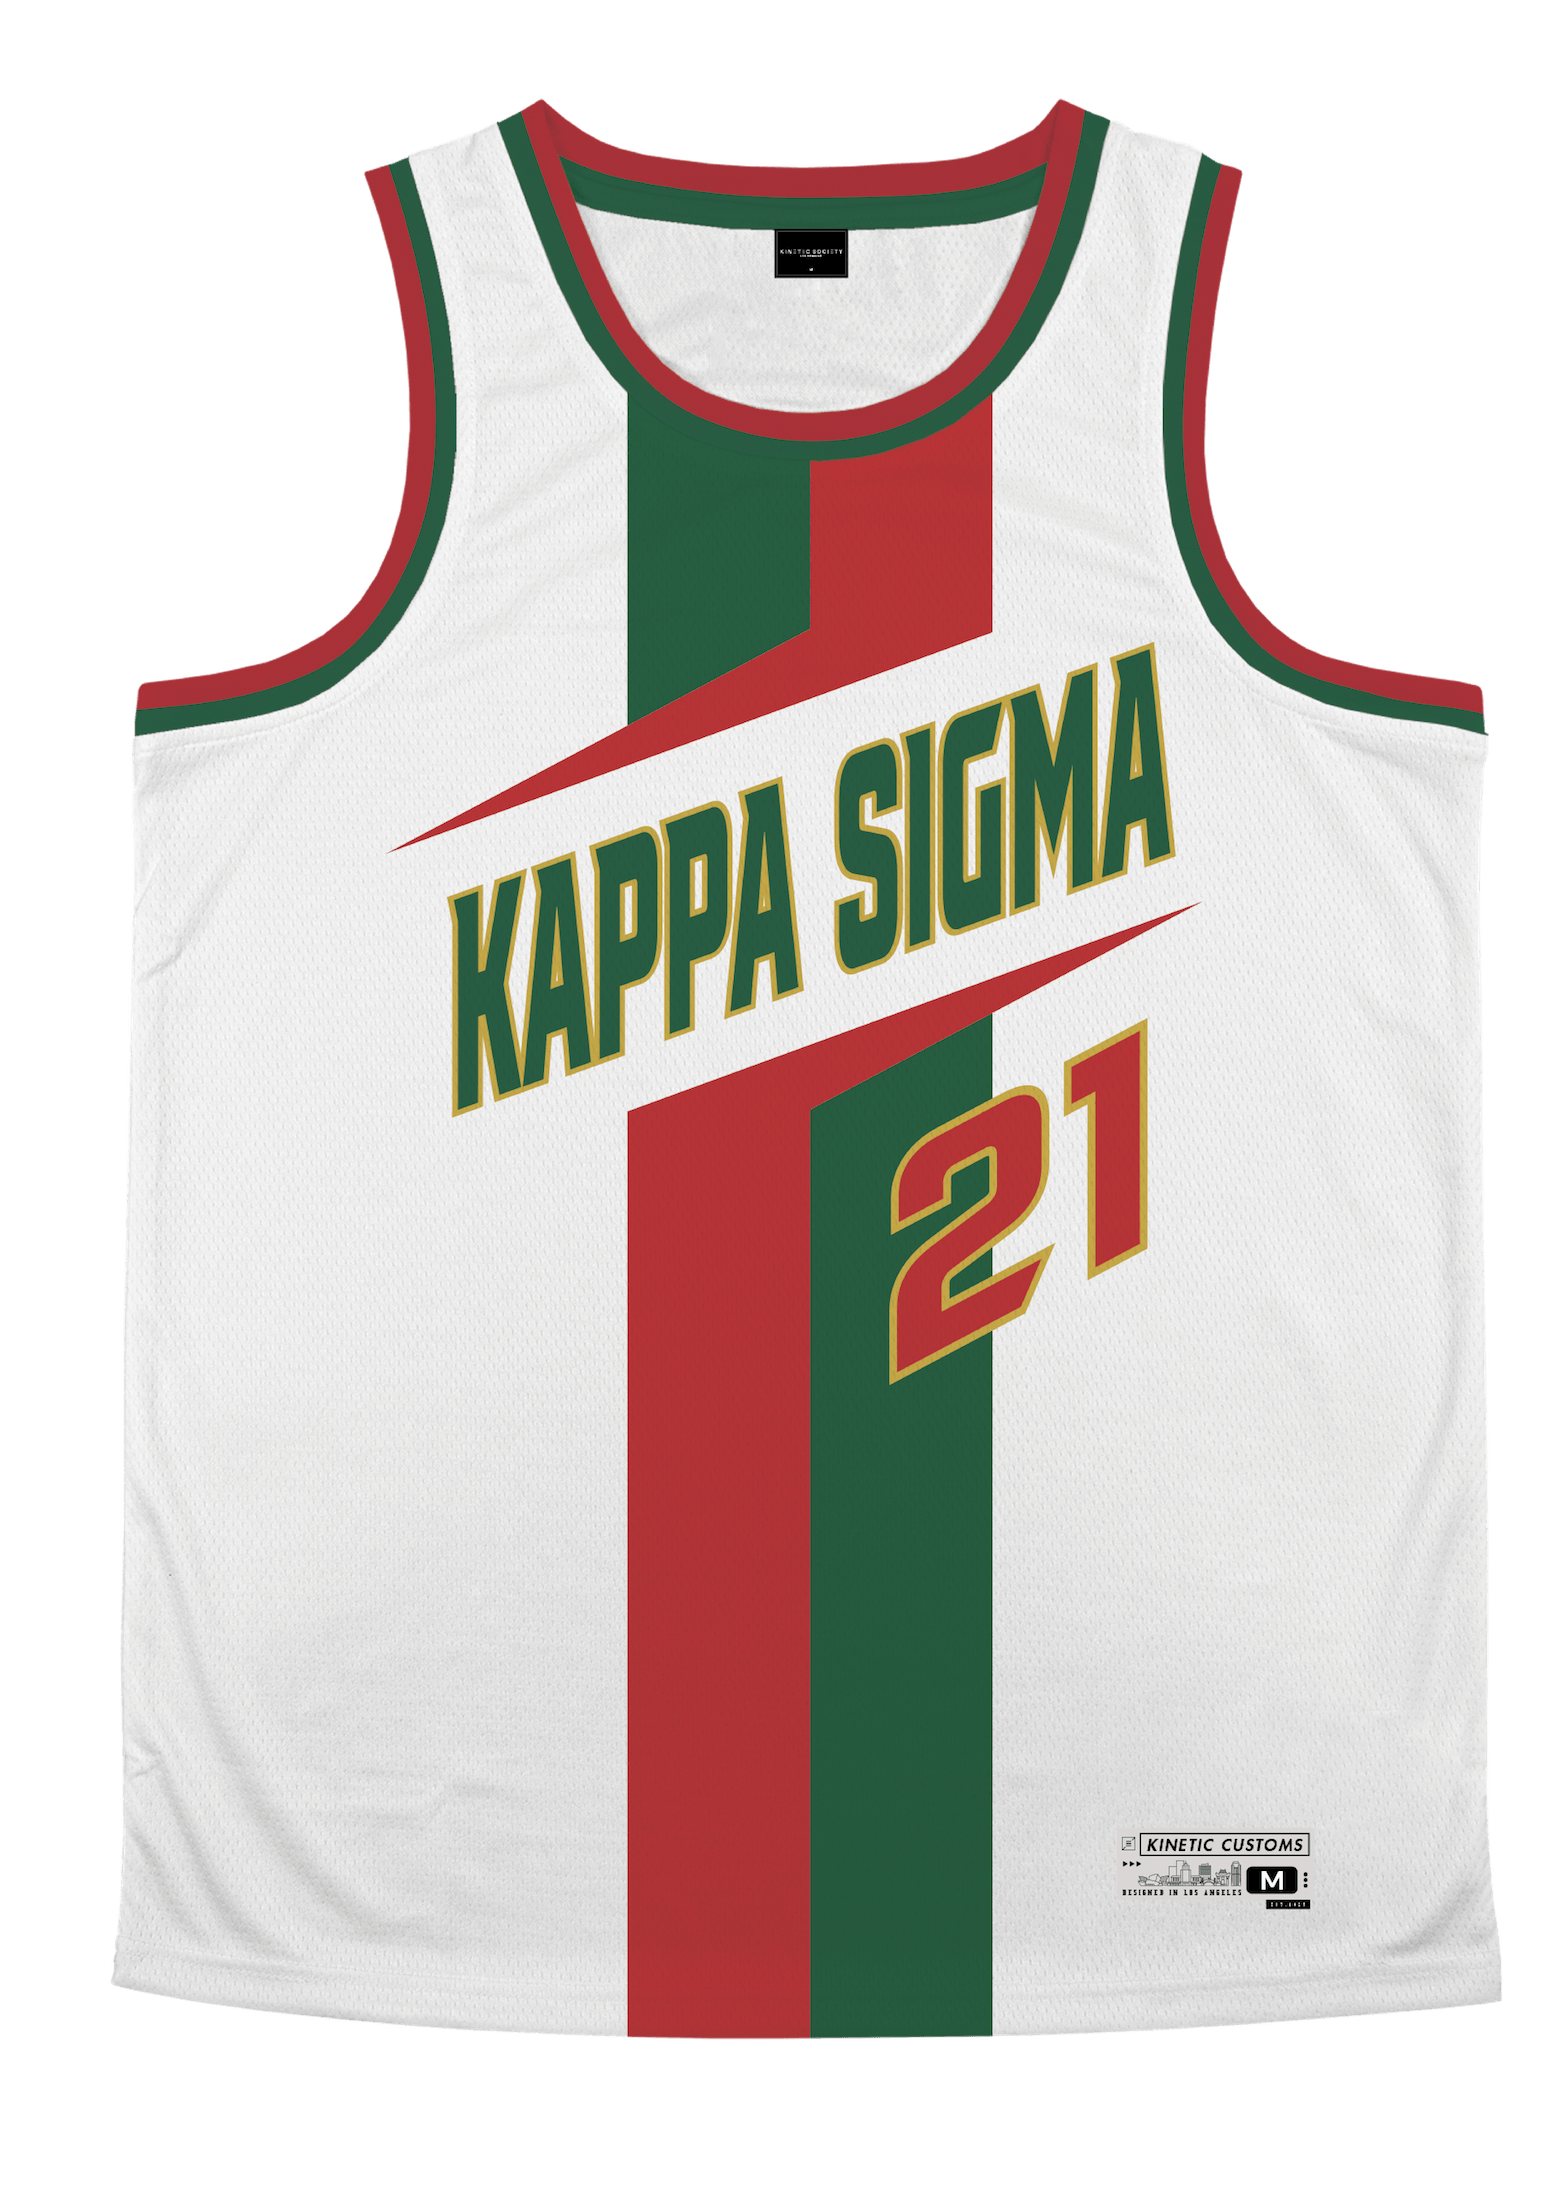 KAPPA SIGMA - Middle Child Basketball Jersey Premium Basketball Kinetic Society LLC 